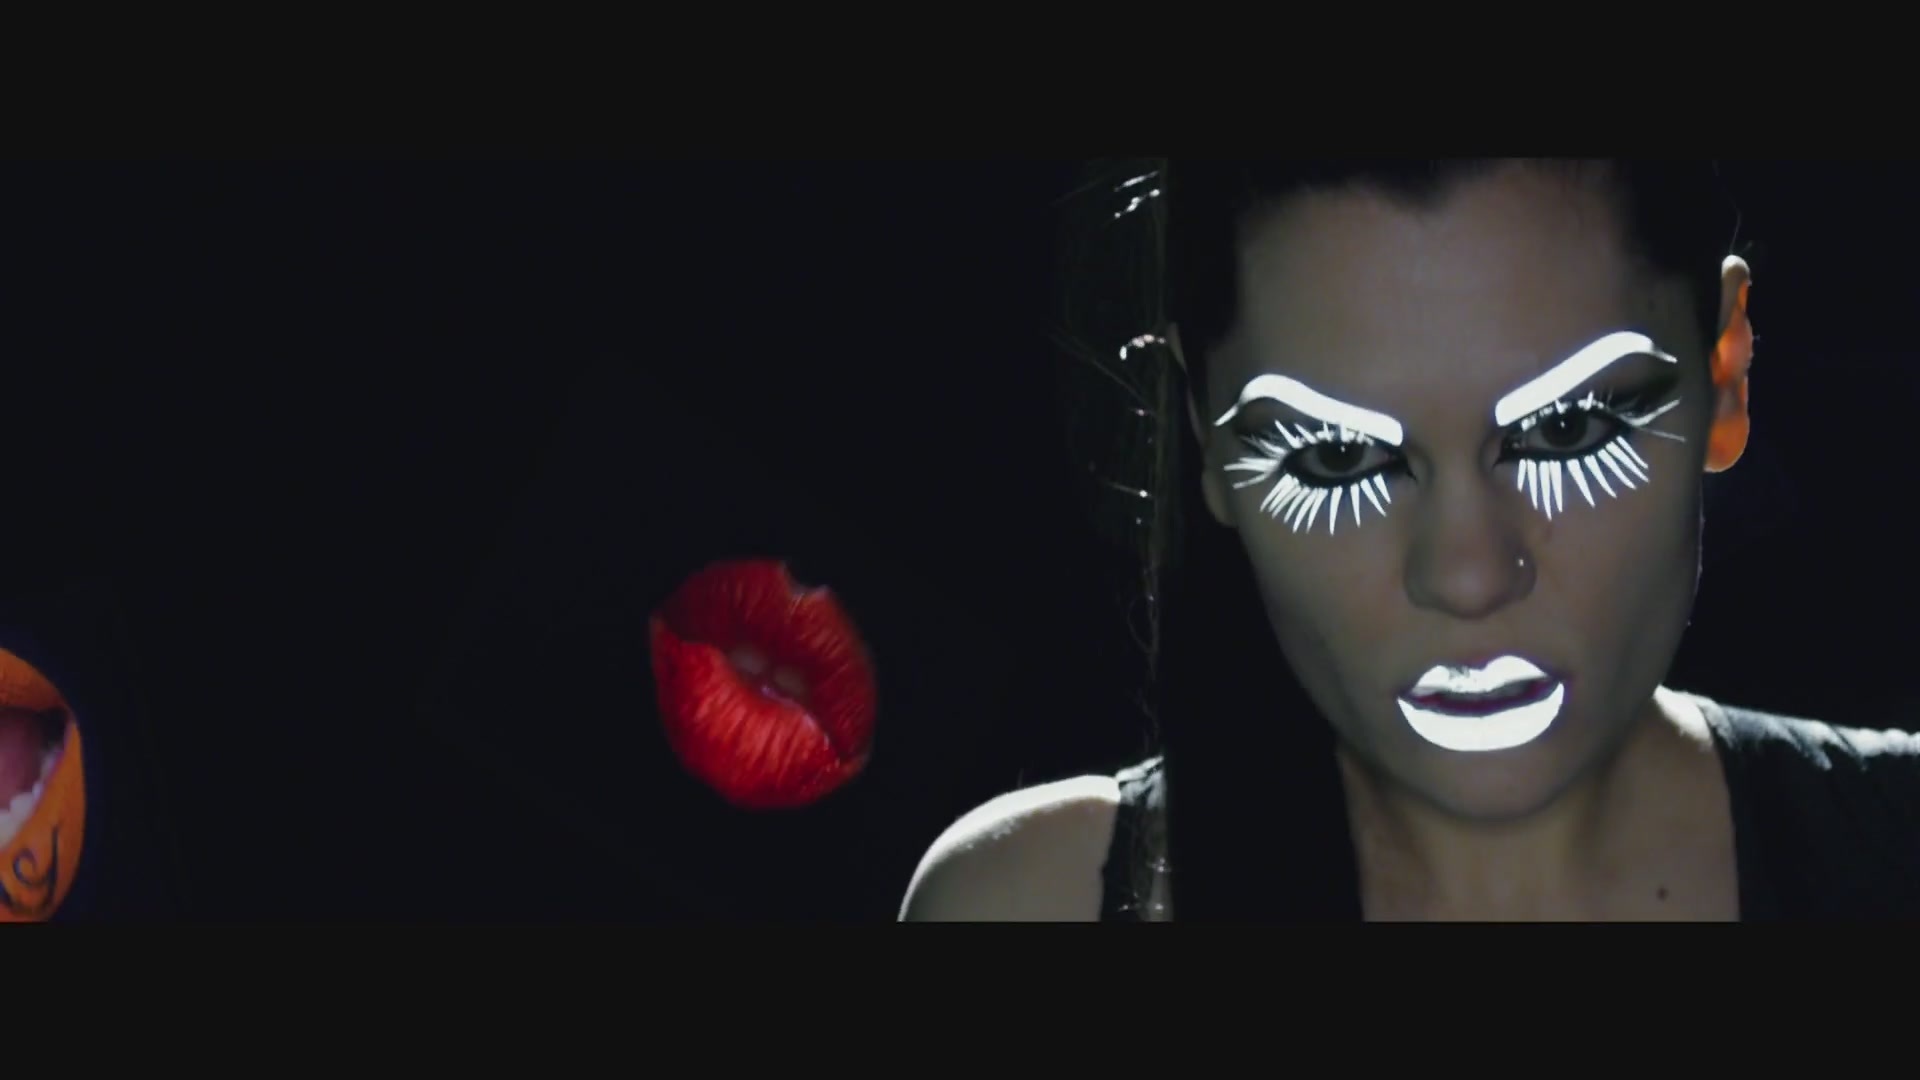 Nobody's Perfect [Music Video] - Jessie J Image (21699915) - Fanpop1920 x 1080